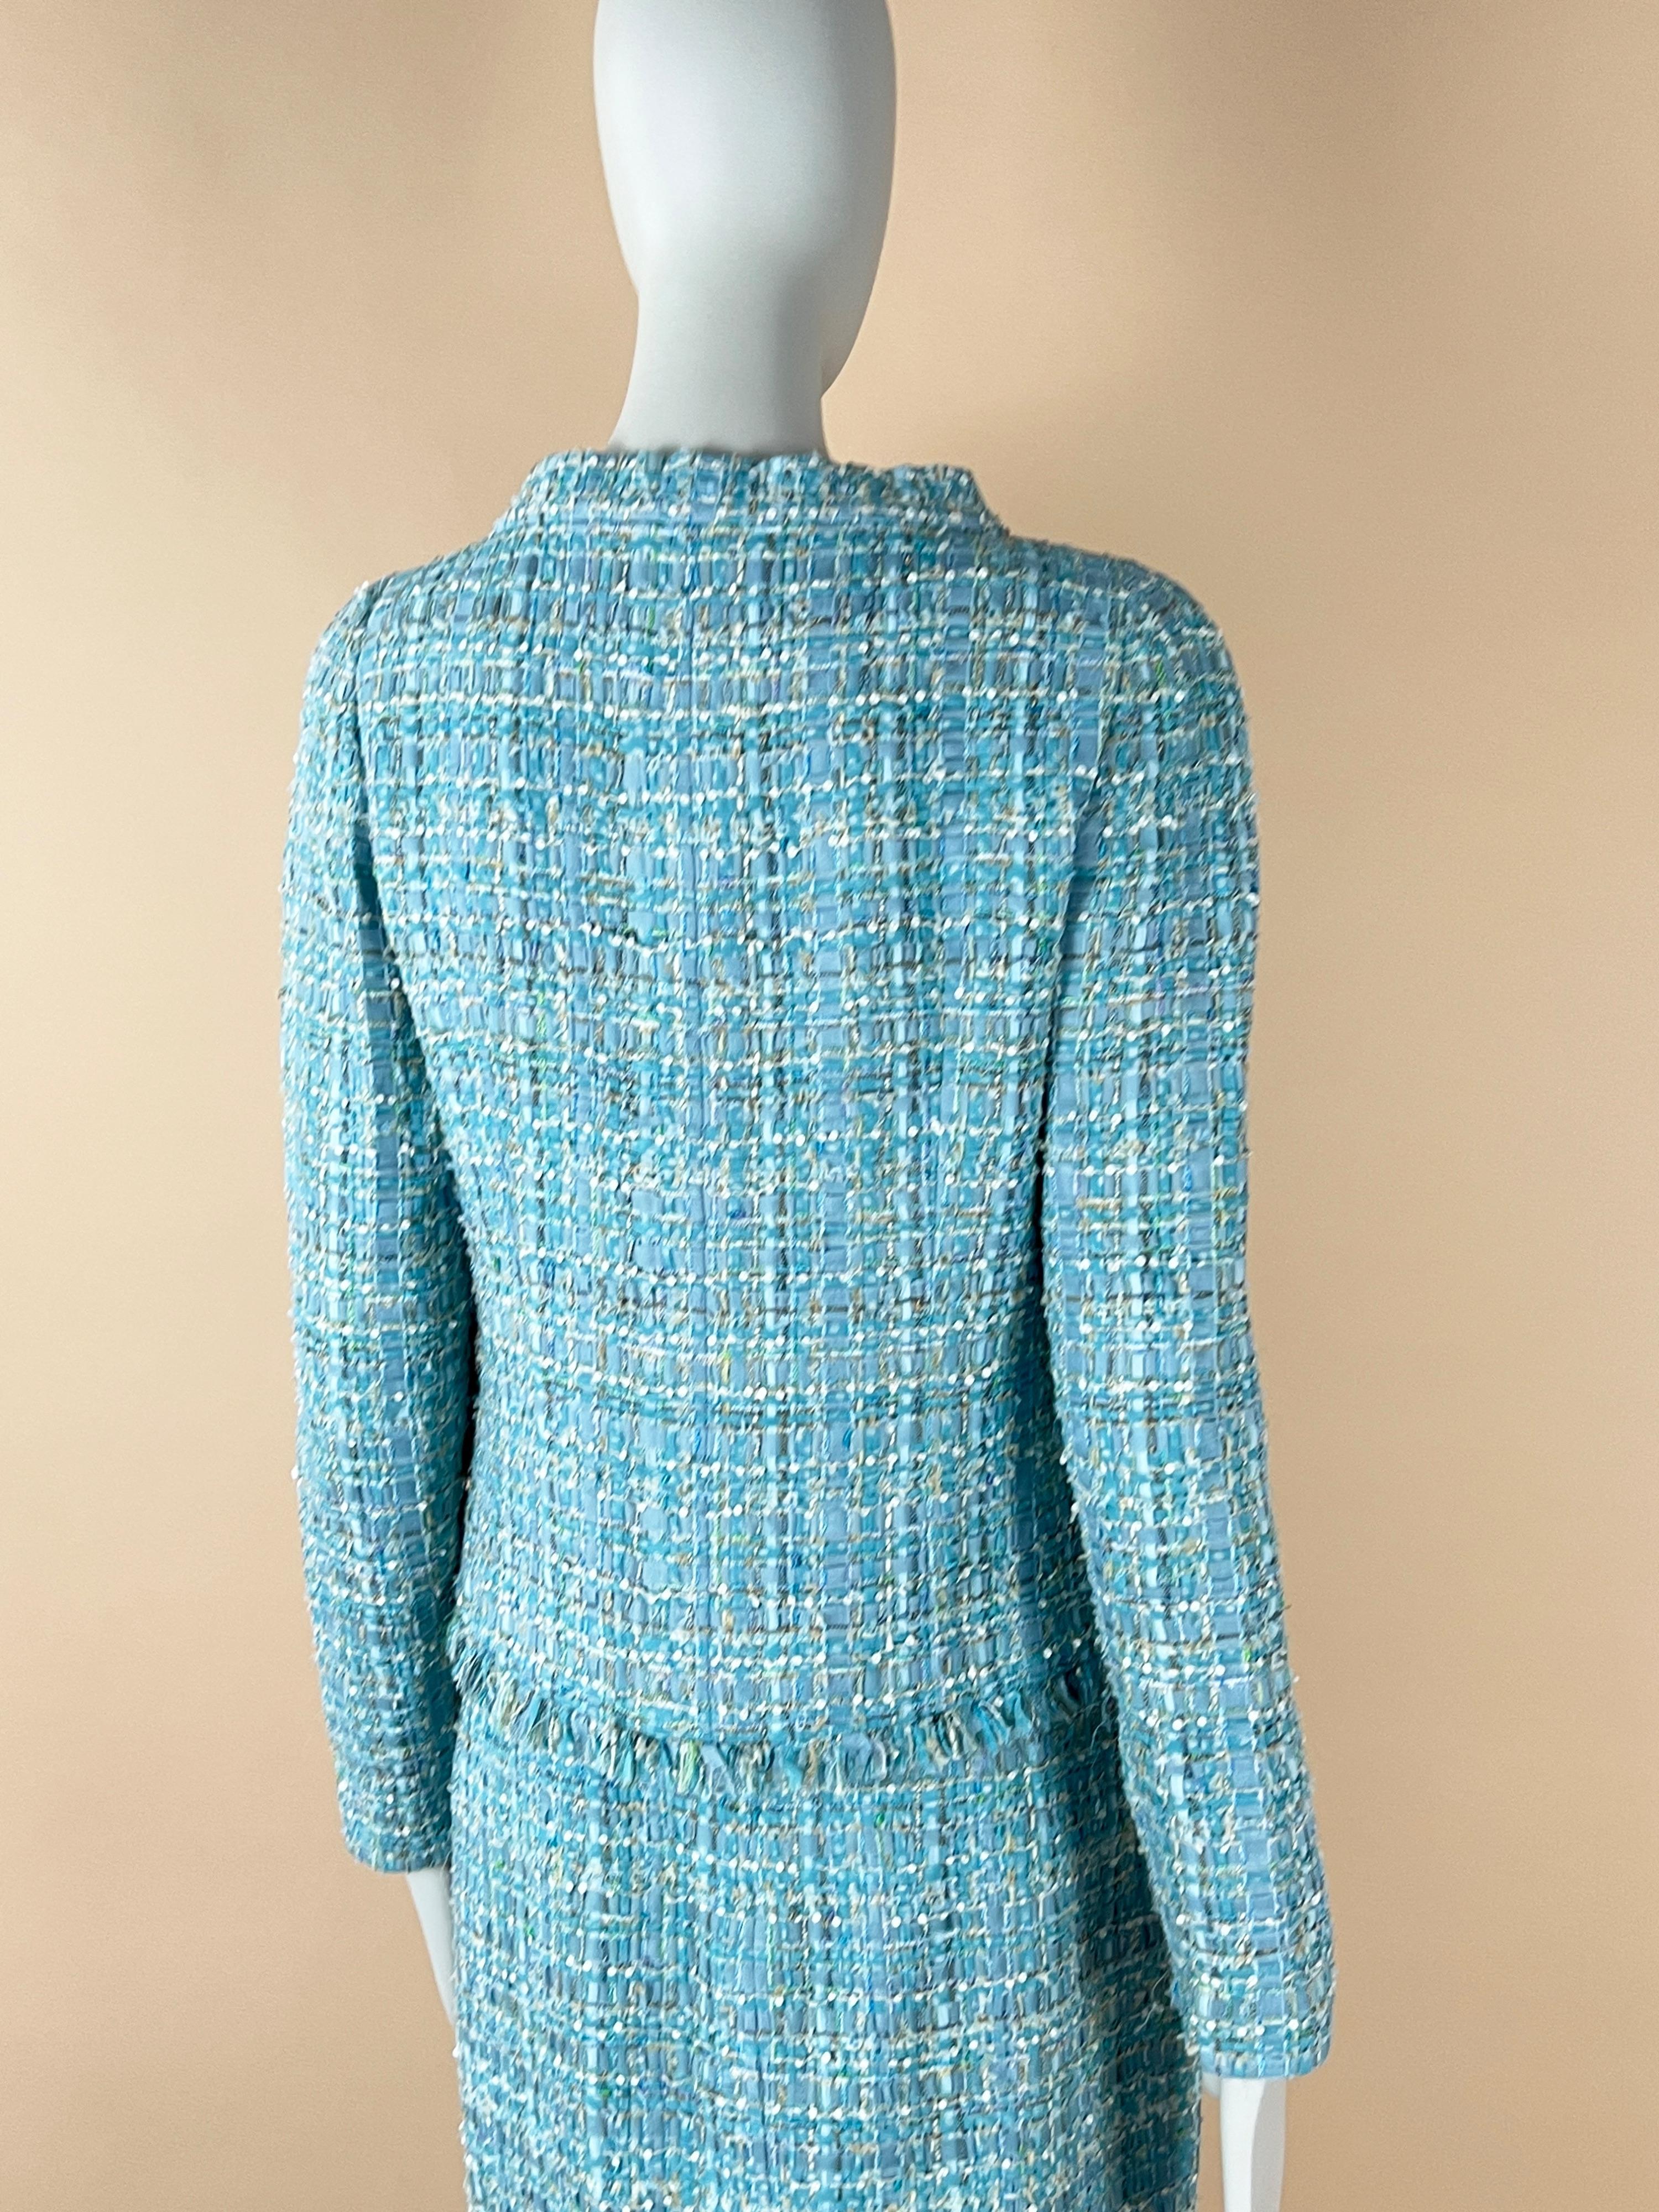 Chanel Turquoise Ribbon Tweed Jacket and Skirt  10